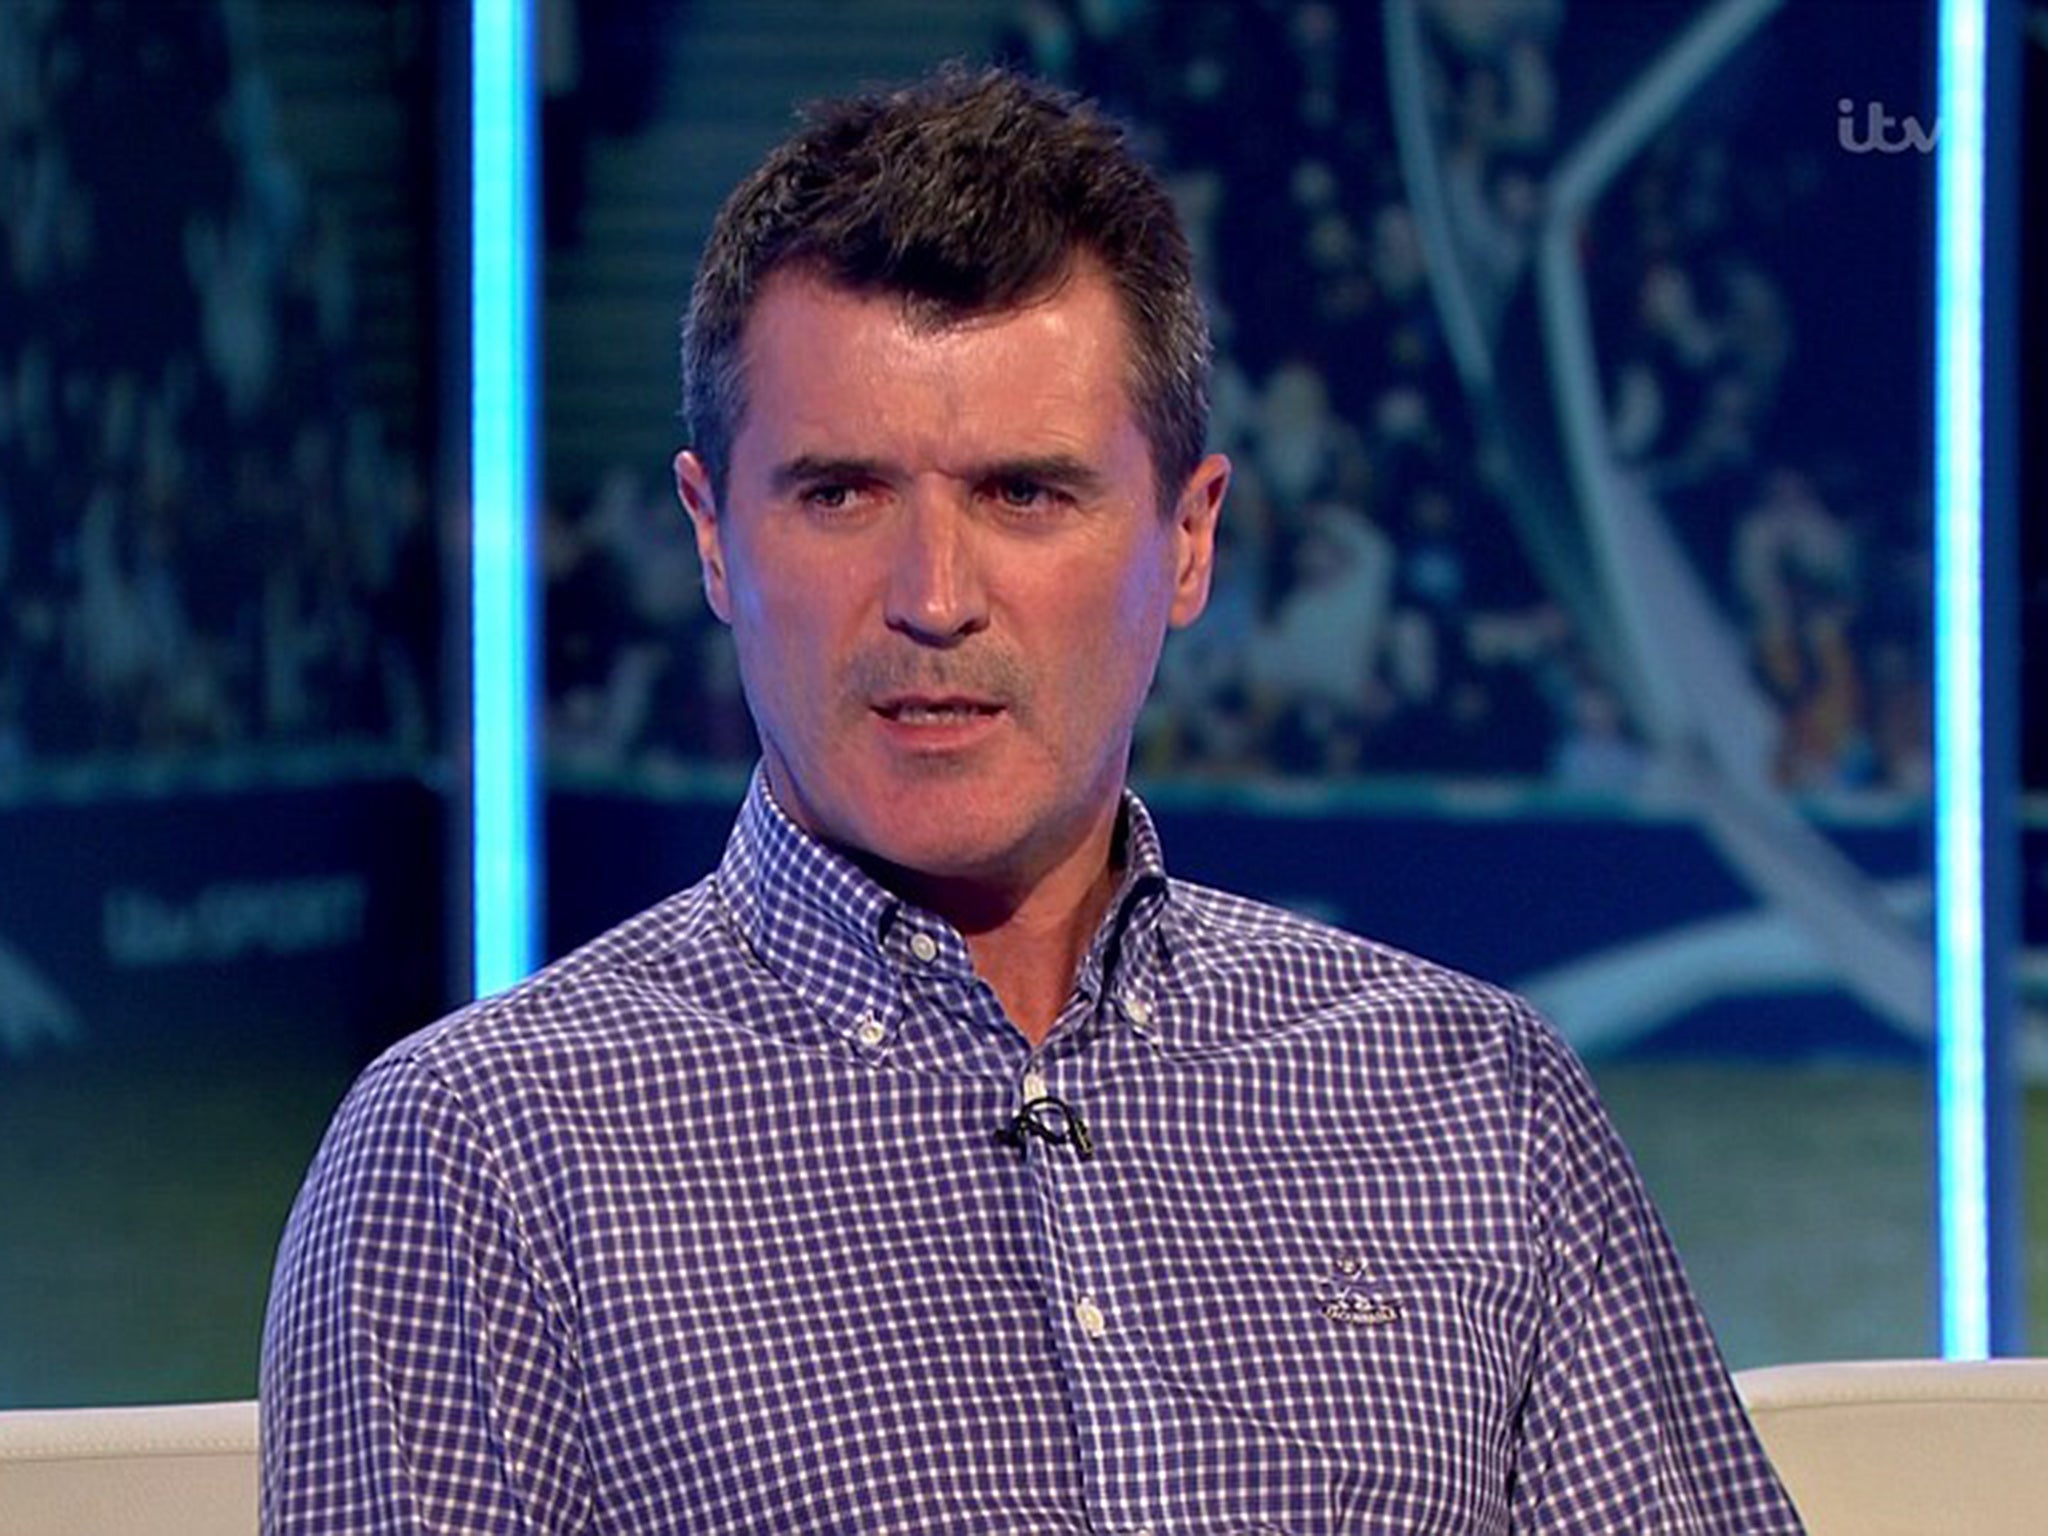 Roy Keane speaking on ITV last night